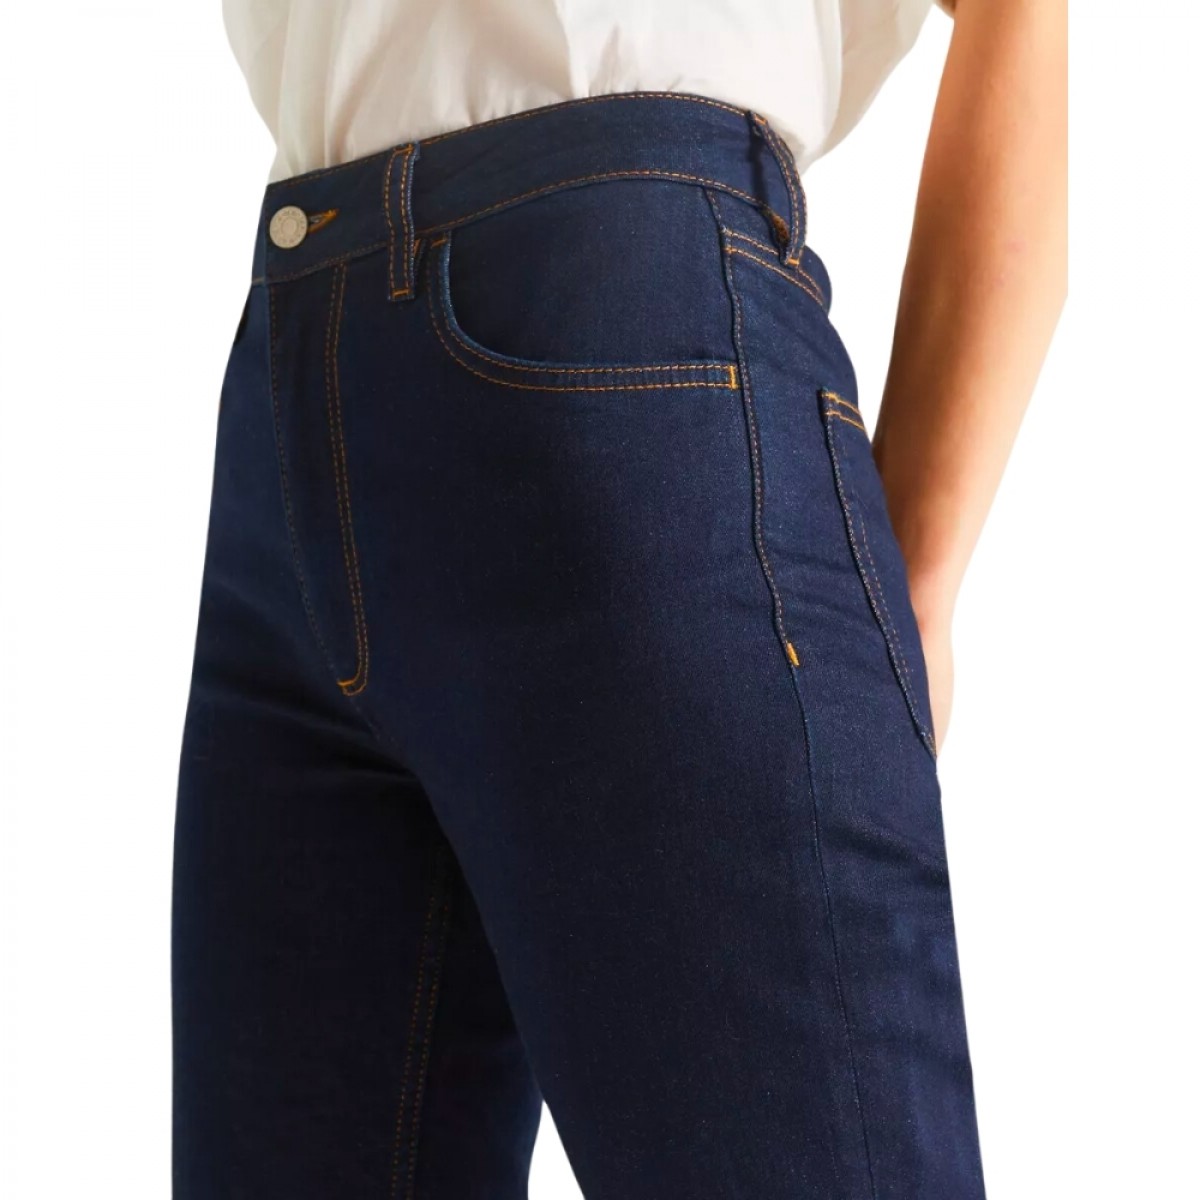 pernille jeans - denim blue - front